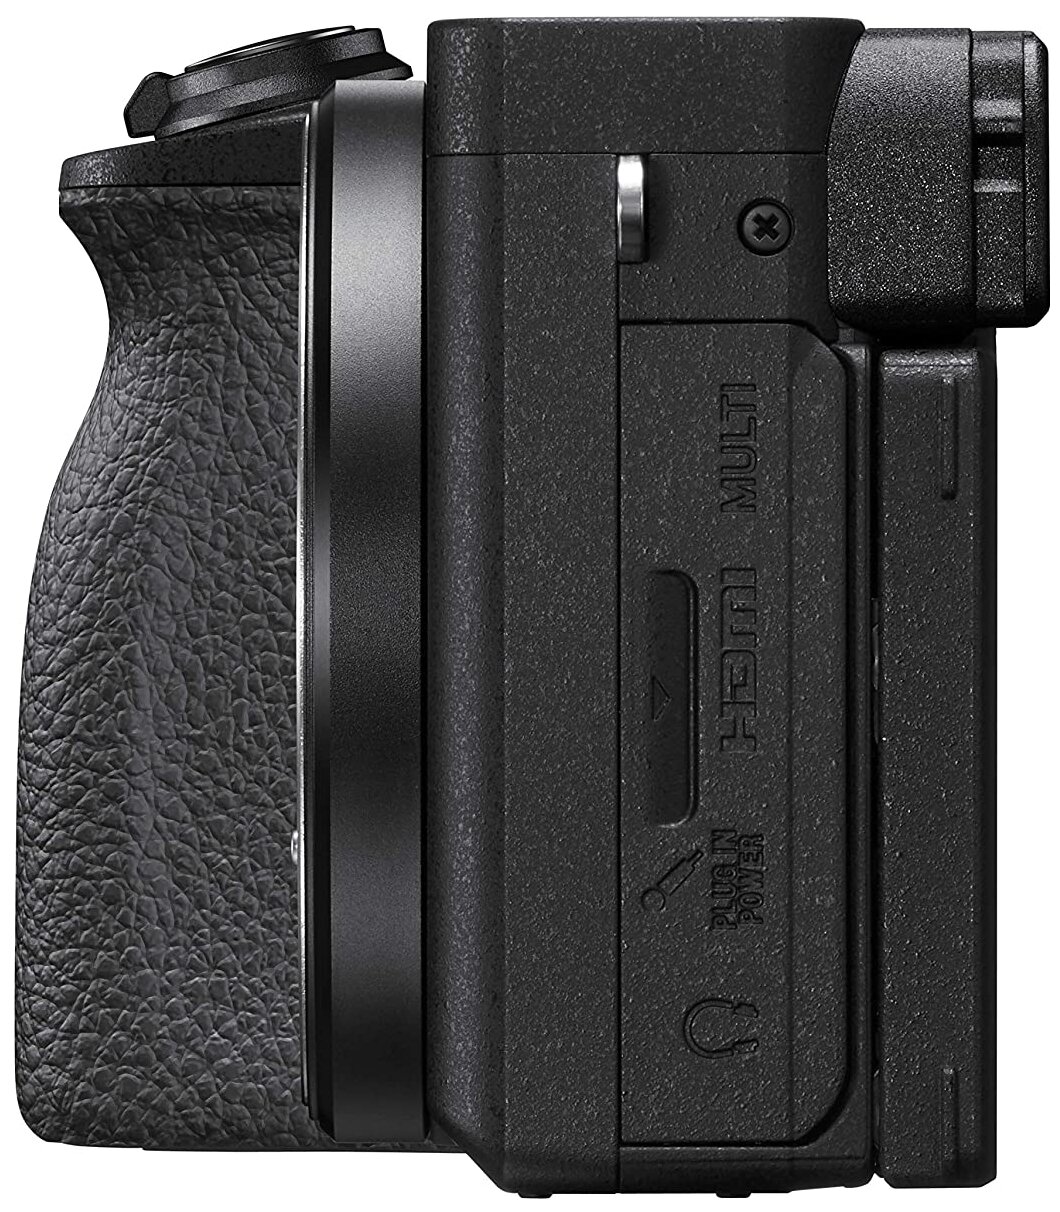 Sony Alpha A6600 kit - фото №4